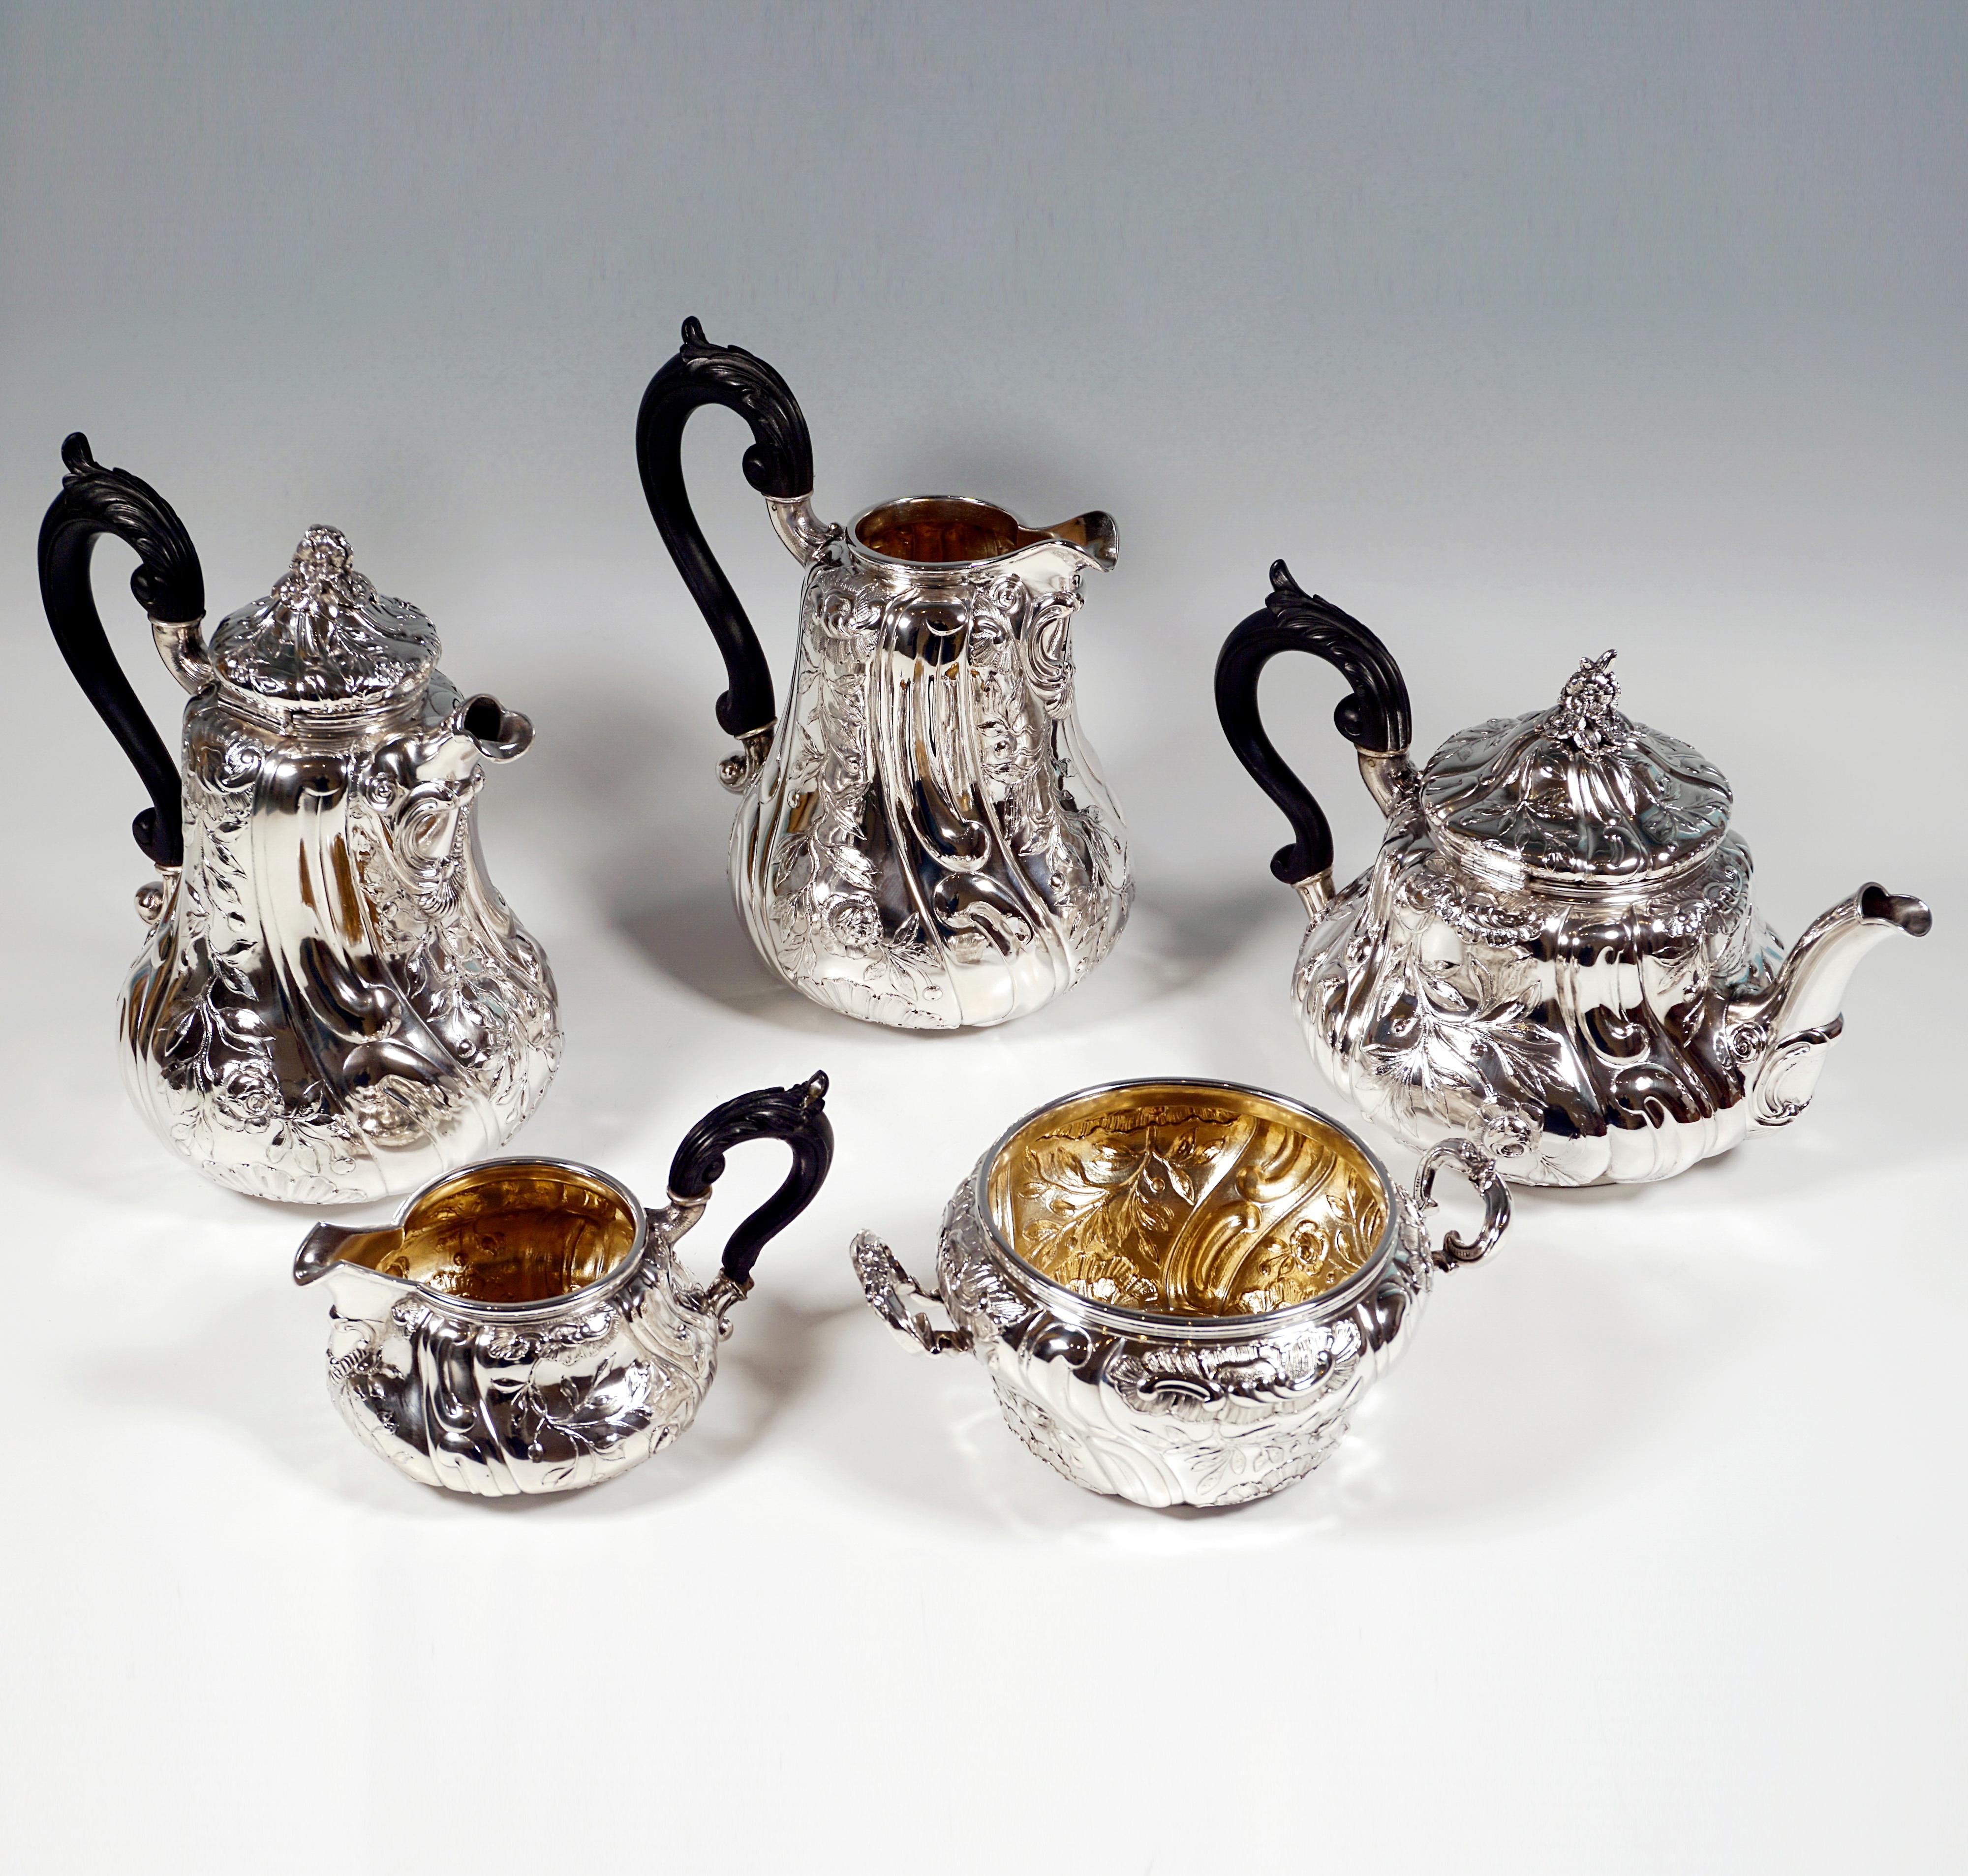 Art Nouveau Silver Koffee And Tea Set With Samowar, Klinkosch Vienna, 1900 For Sale 2